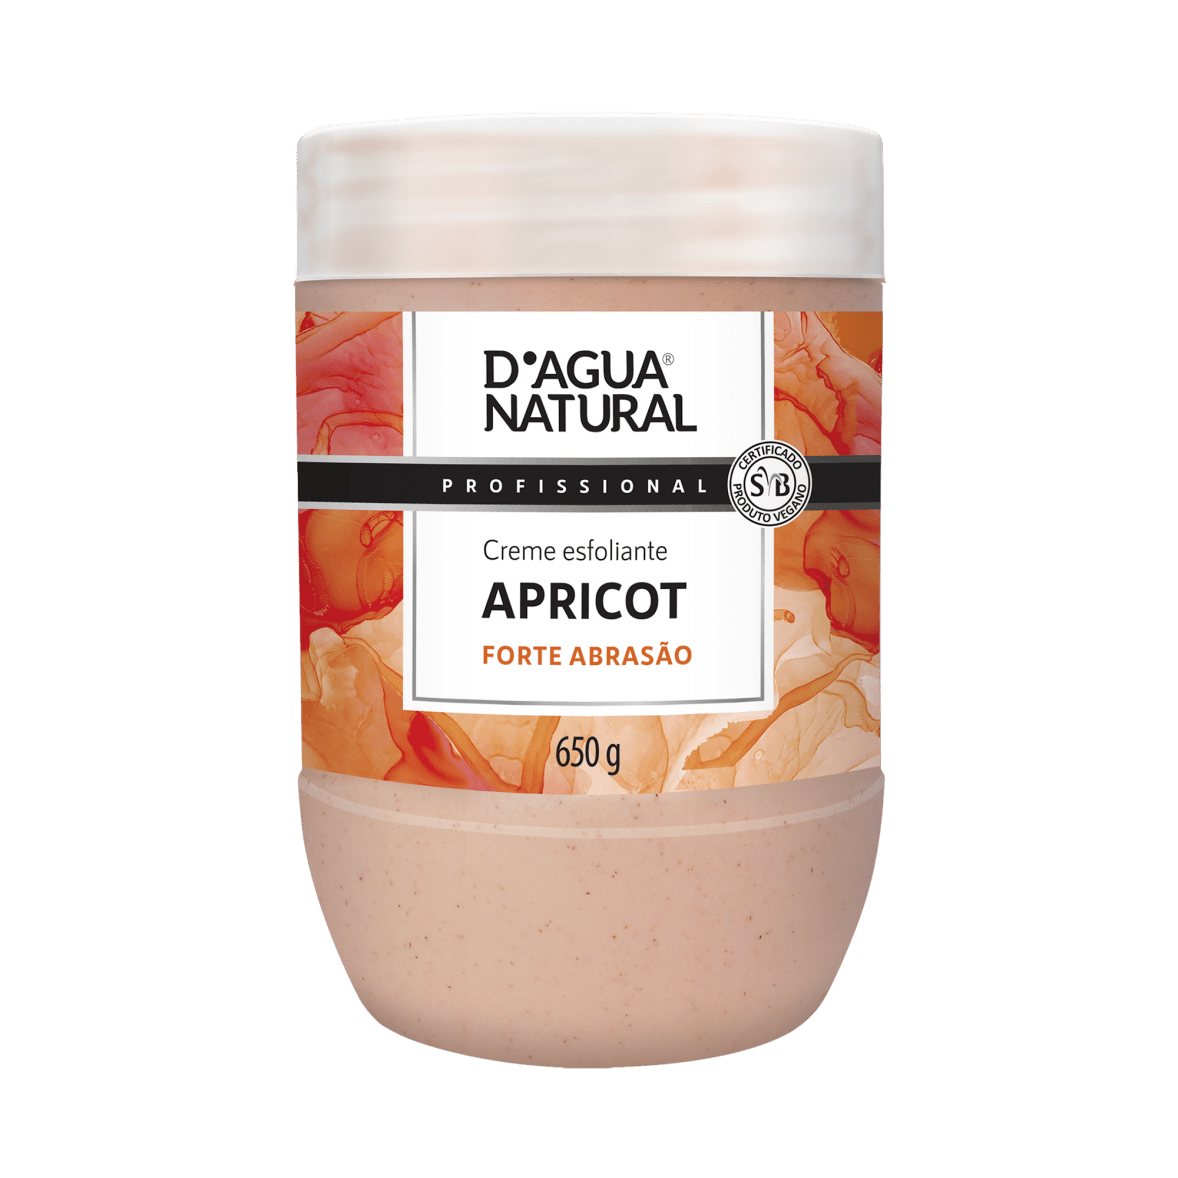 Creme Esfoliante Apricot Forte Abrasão - D'Agua natural